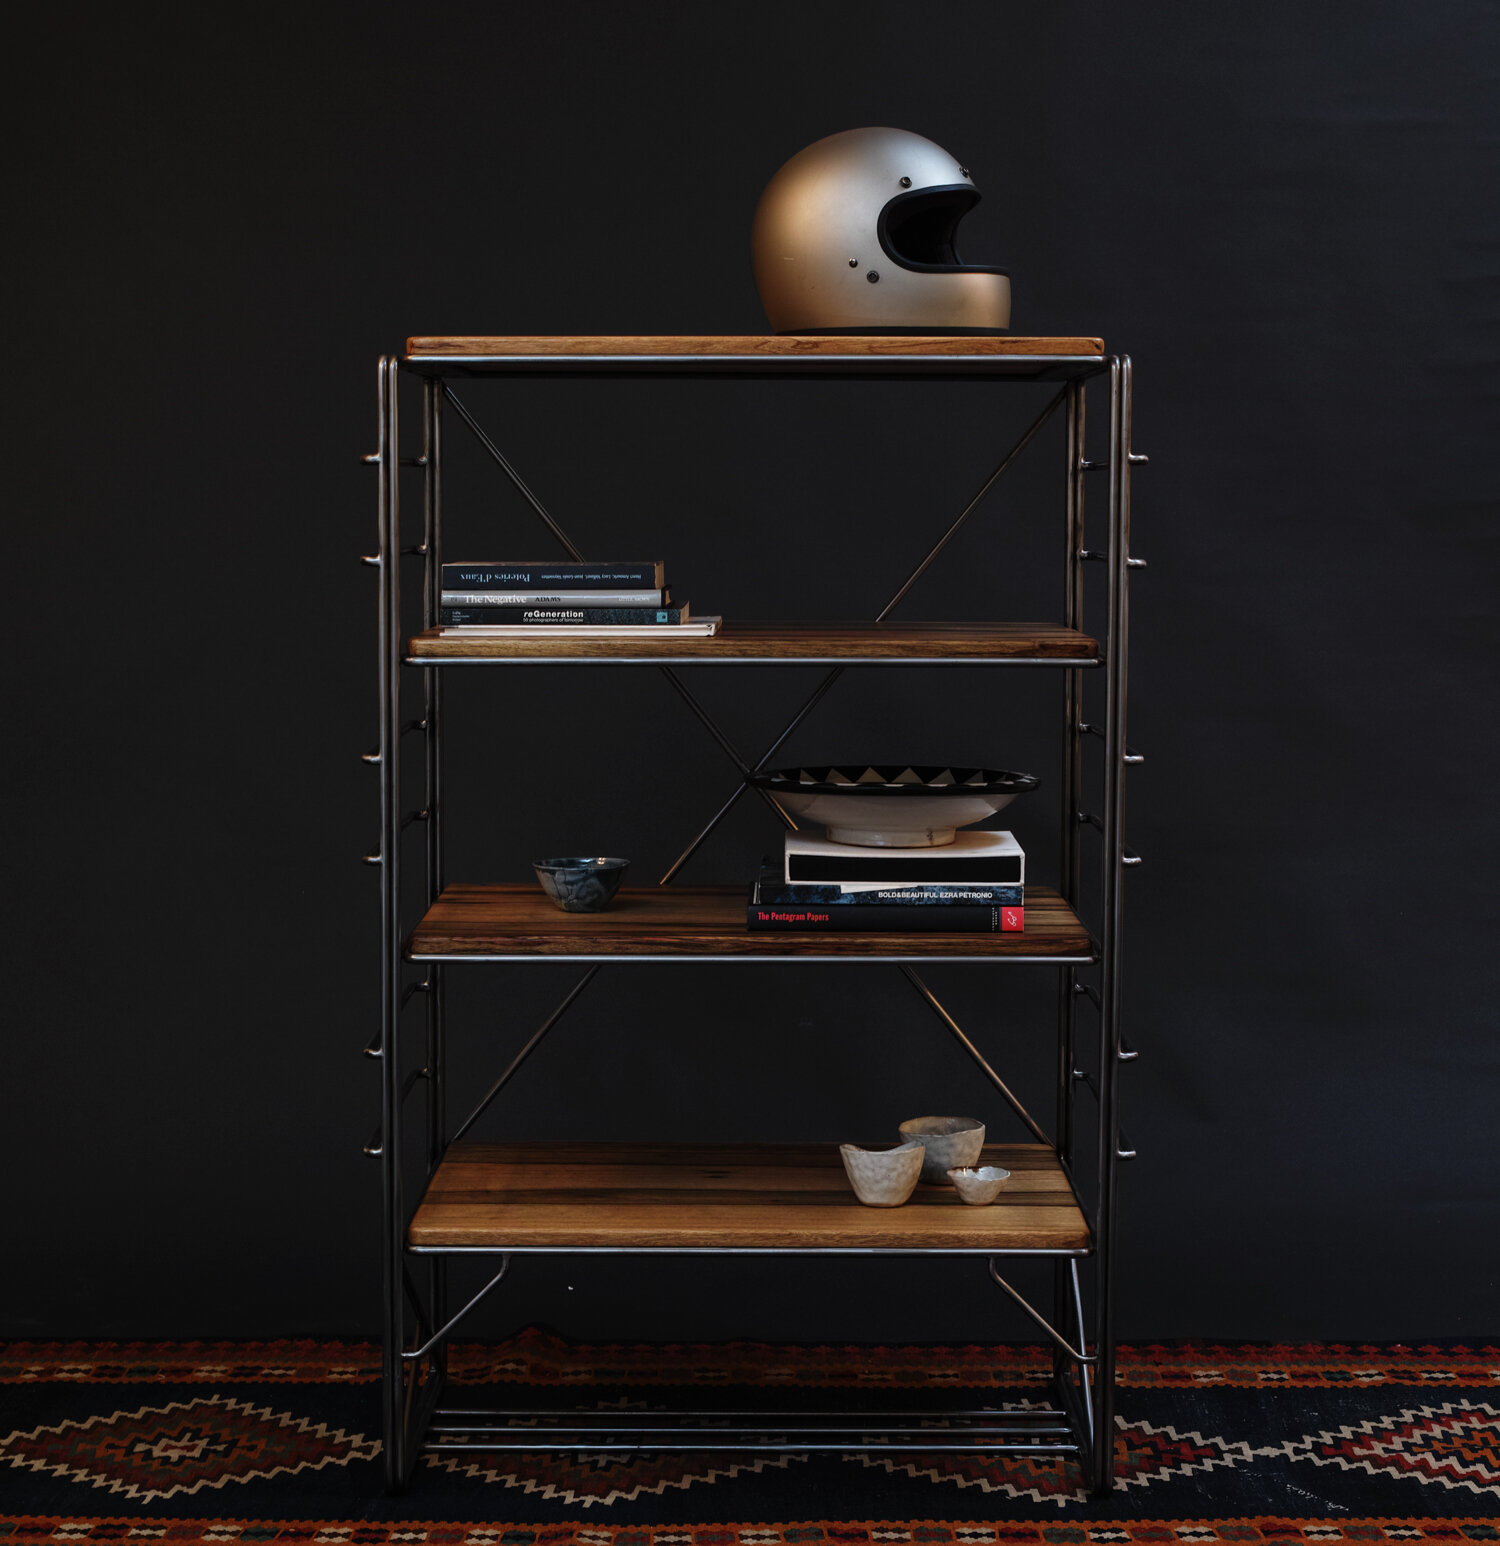 wired-shelf-books-motorbike-helmet-metal-and-wood-furniture-design-lebanon-beirut.jpg